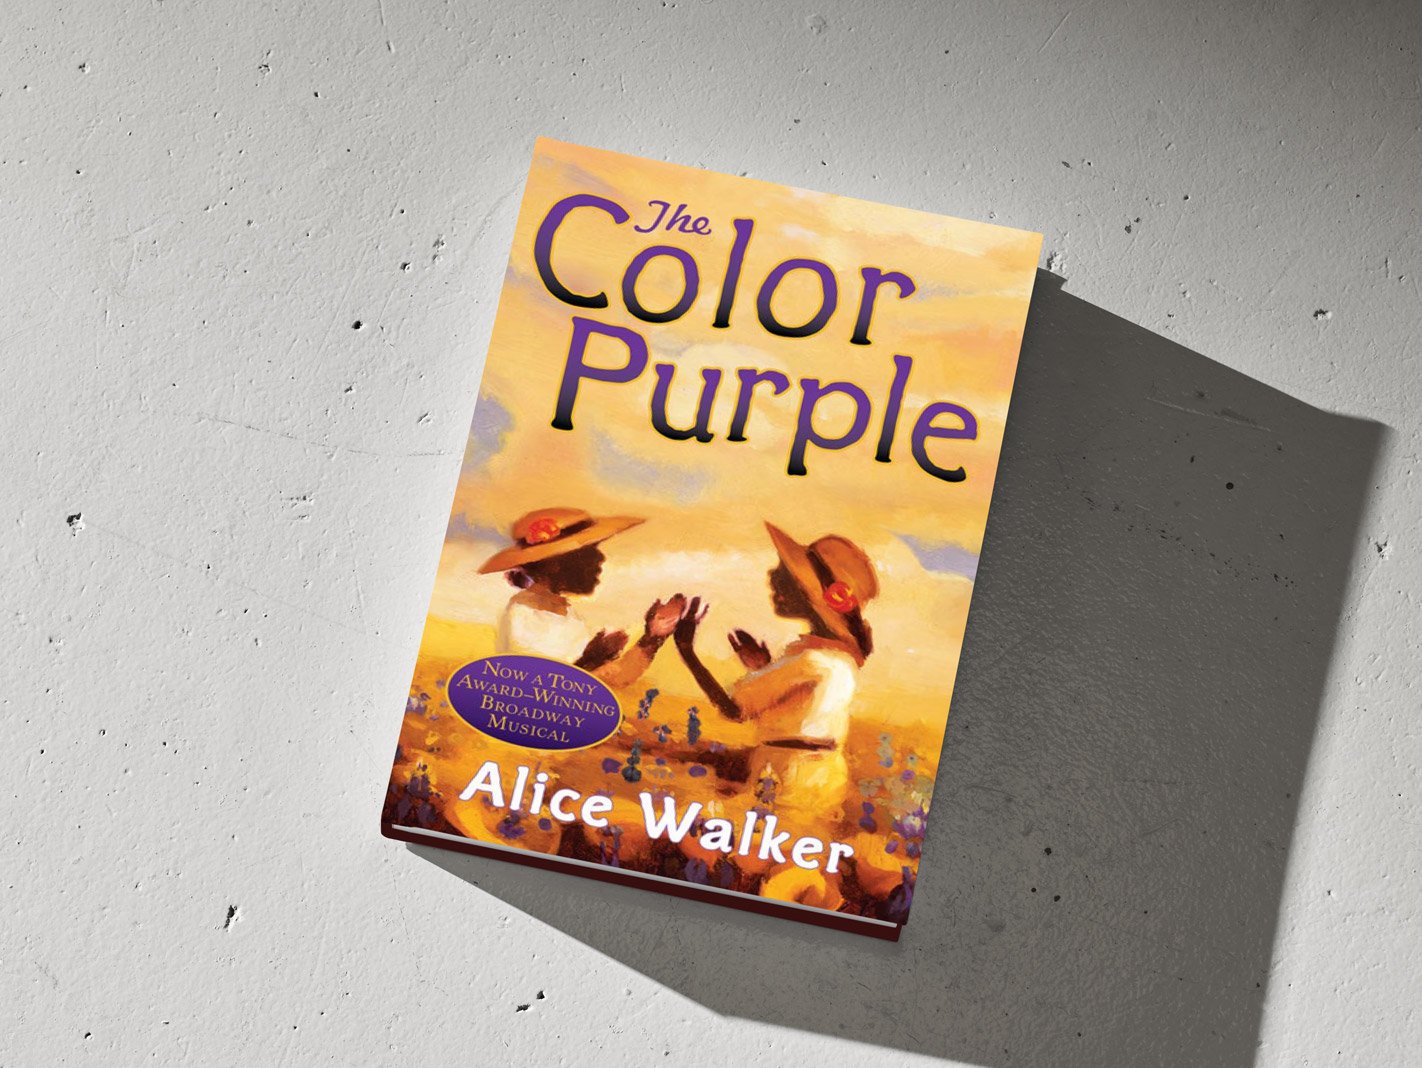 peter-sylvada-alice-walker-the-color-purple-book.jpg